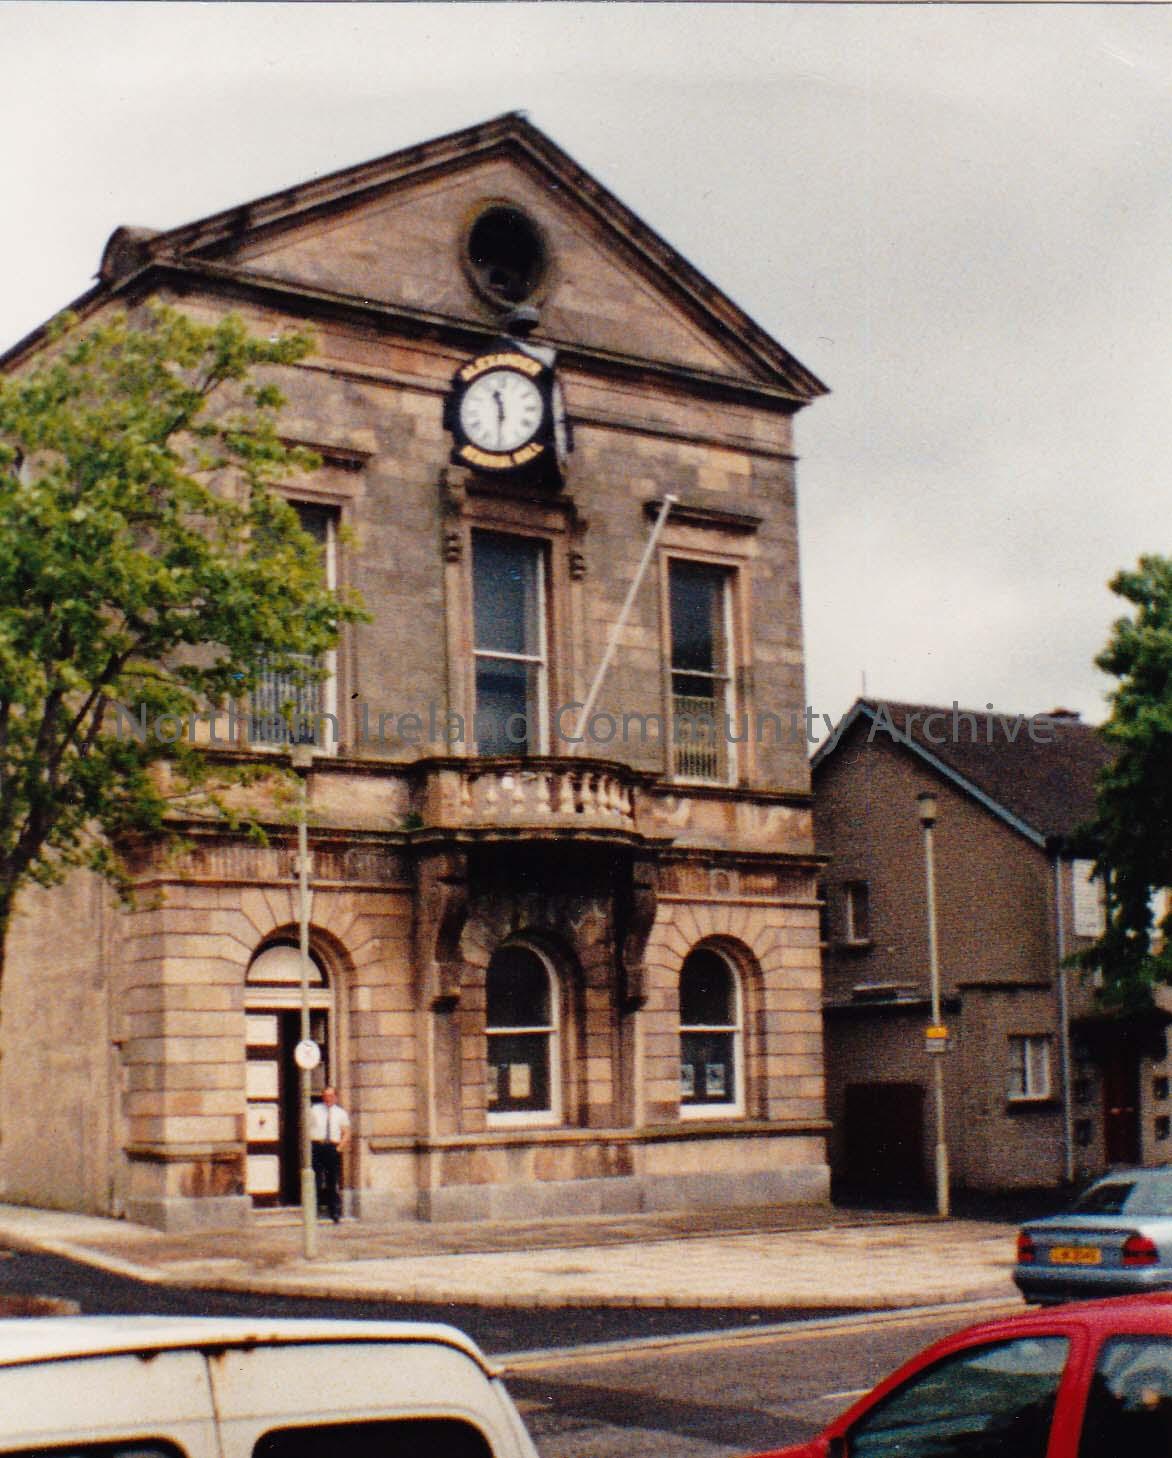 Town Hall, Main Street